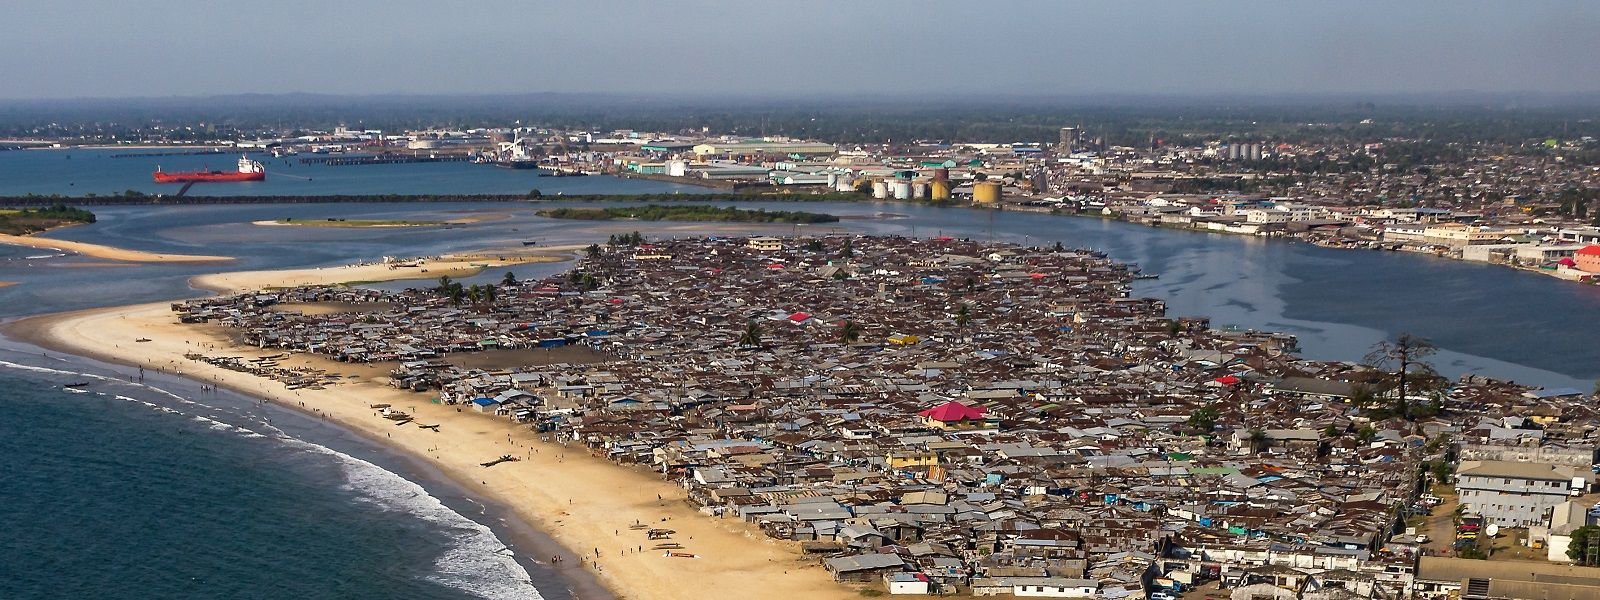 Liberia - Land im Aufbruch